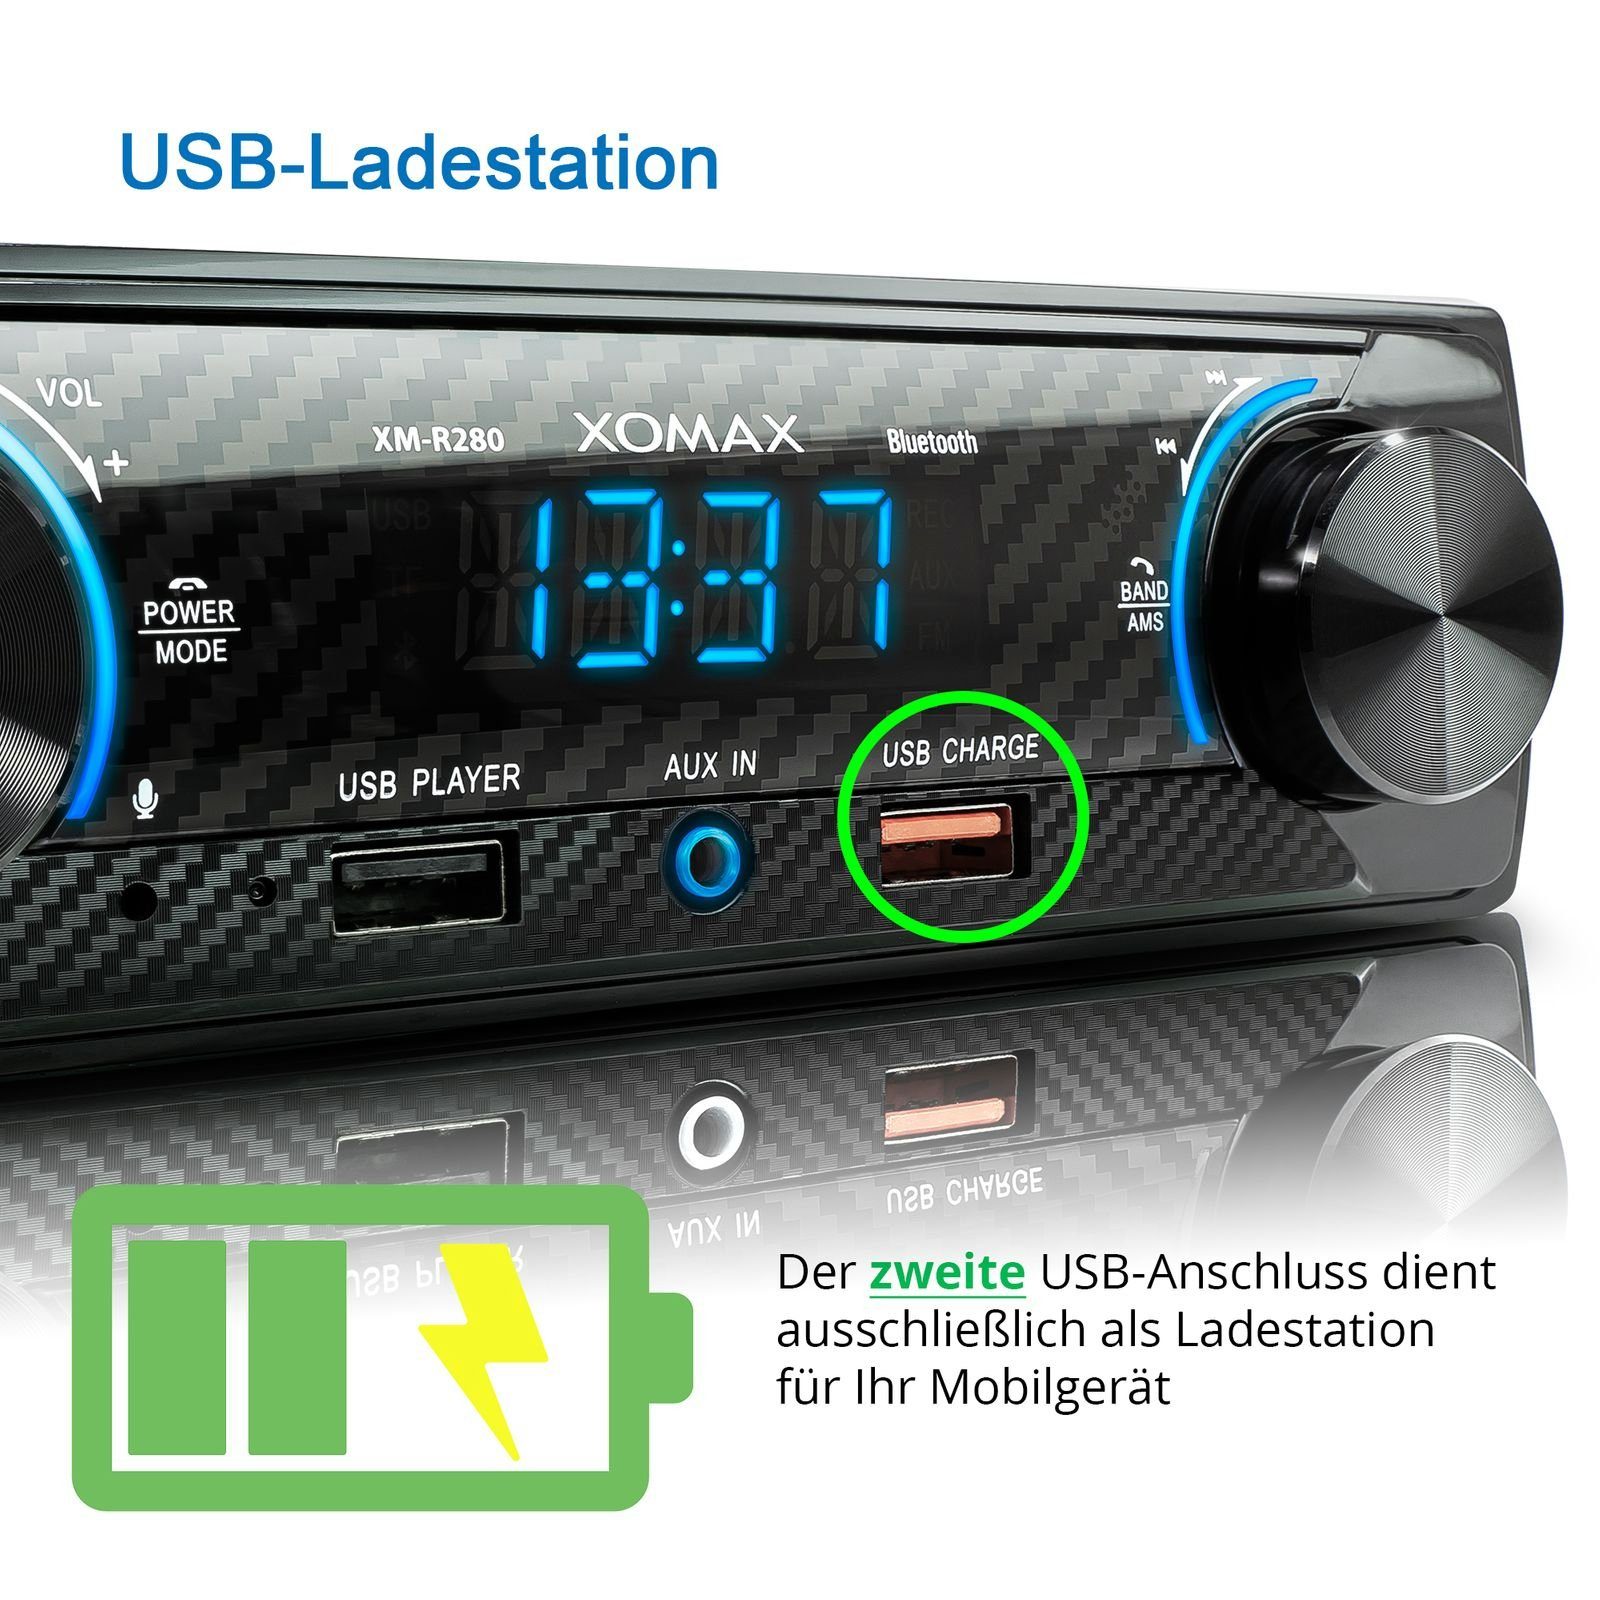 XOMAX XM-V418 Autoradio mit DAB+ plus, 4 Zoll Touchscreen Bildschirm,  Bluetooth, USB, SD, Aux, 1 DIN